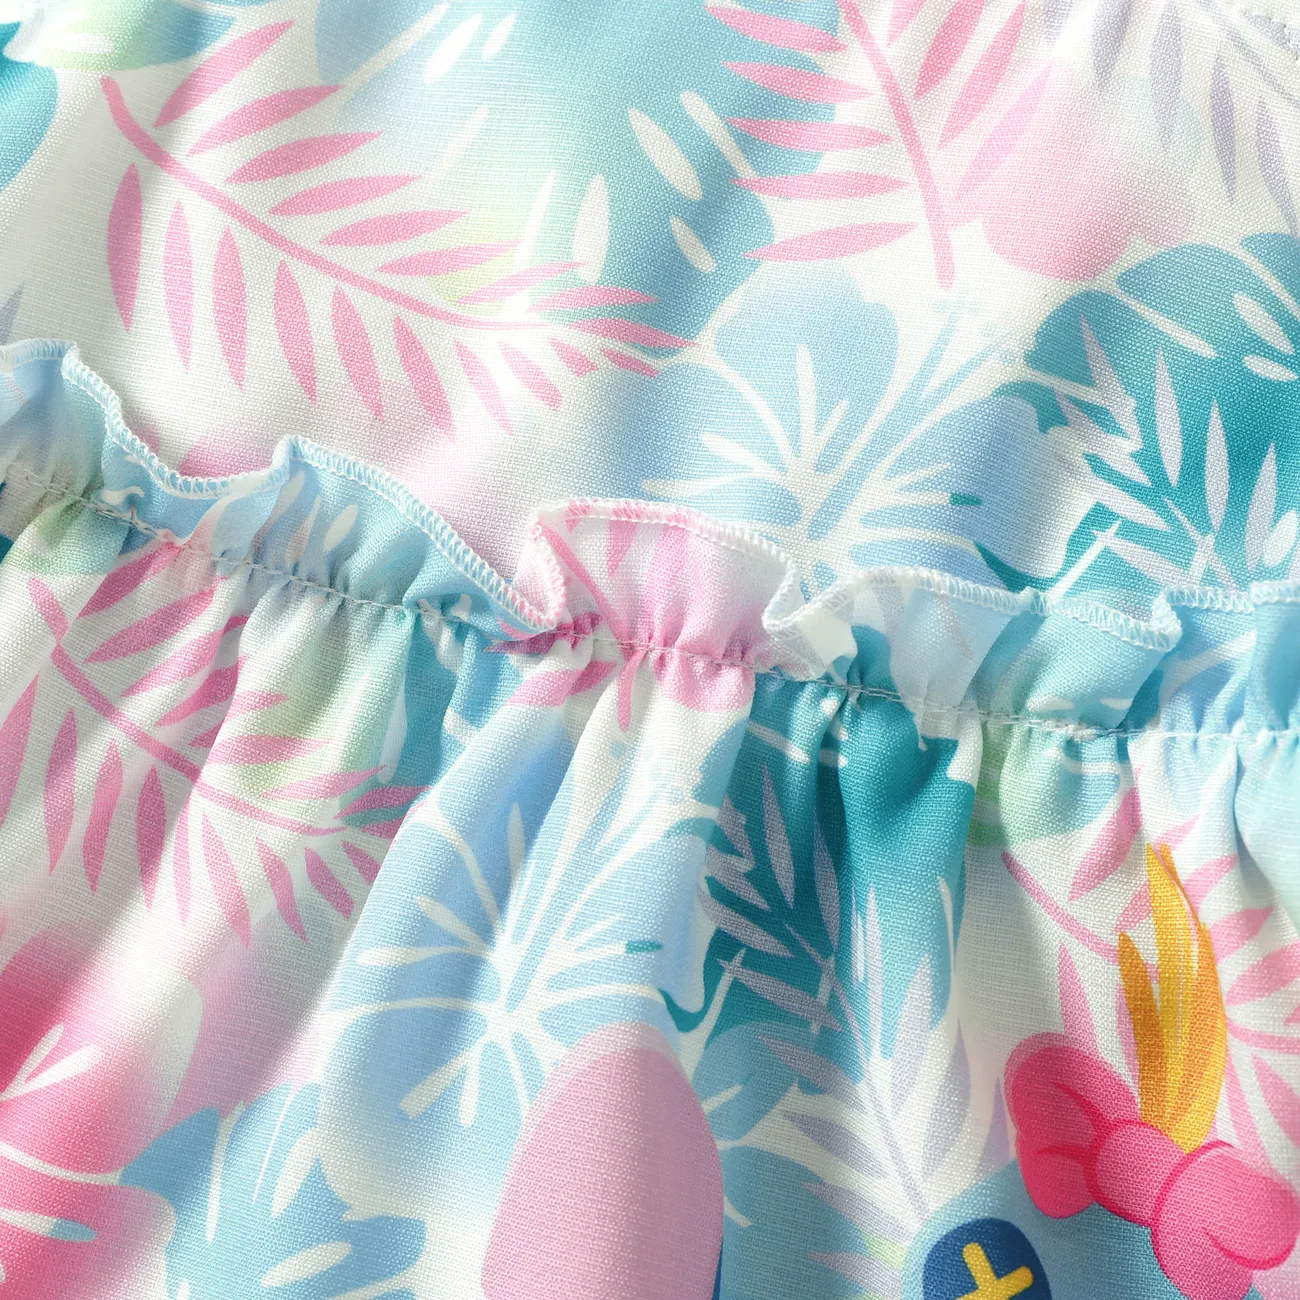 Disney Stitch Baby Girls 1pc Tropical Flower Print Ruffle Sleeveless Dress Multi-color big image 1